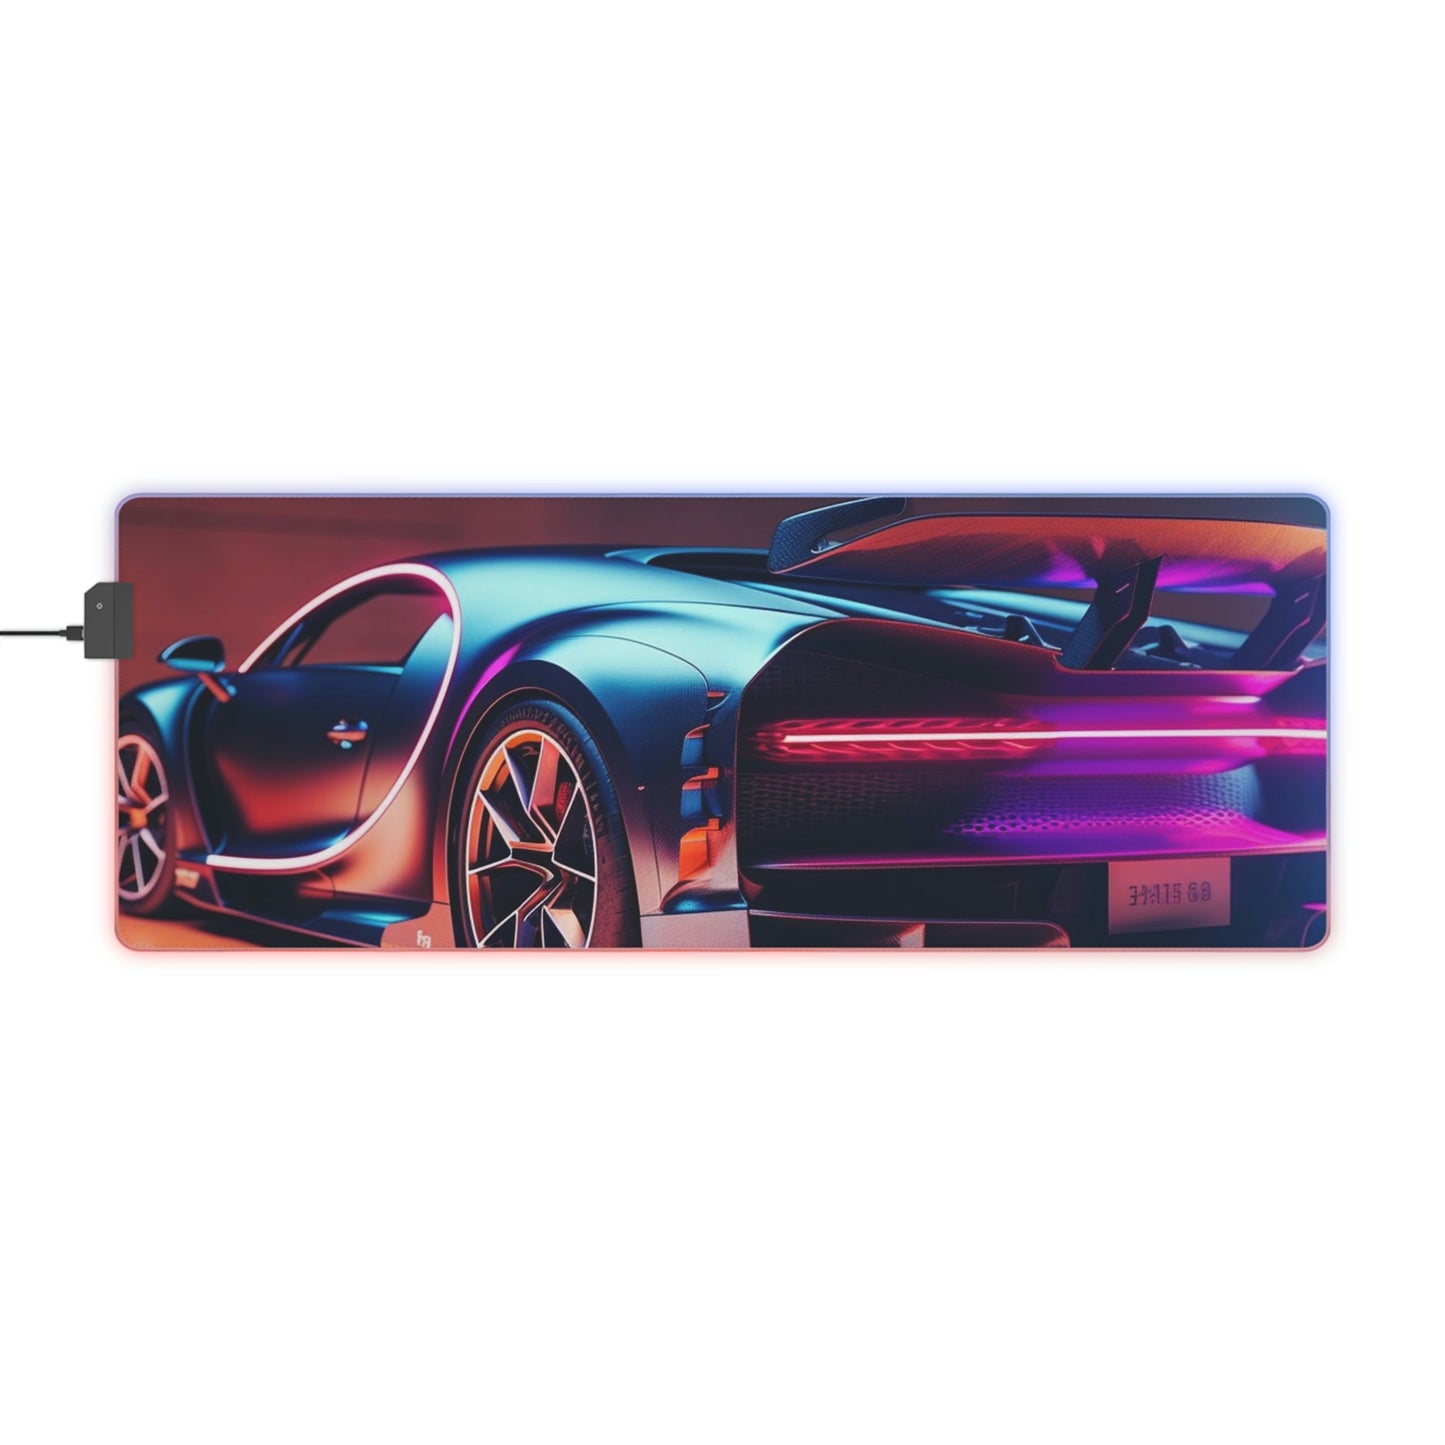 LED Gaming Mouse Pad Hyper Bugatti Neon Chiron 2